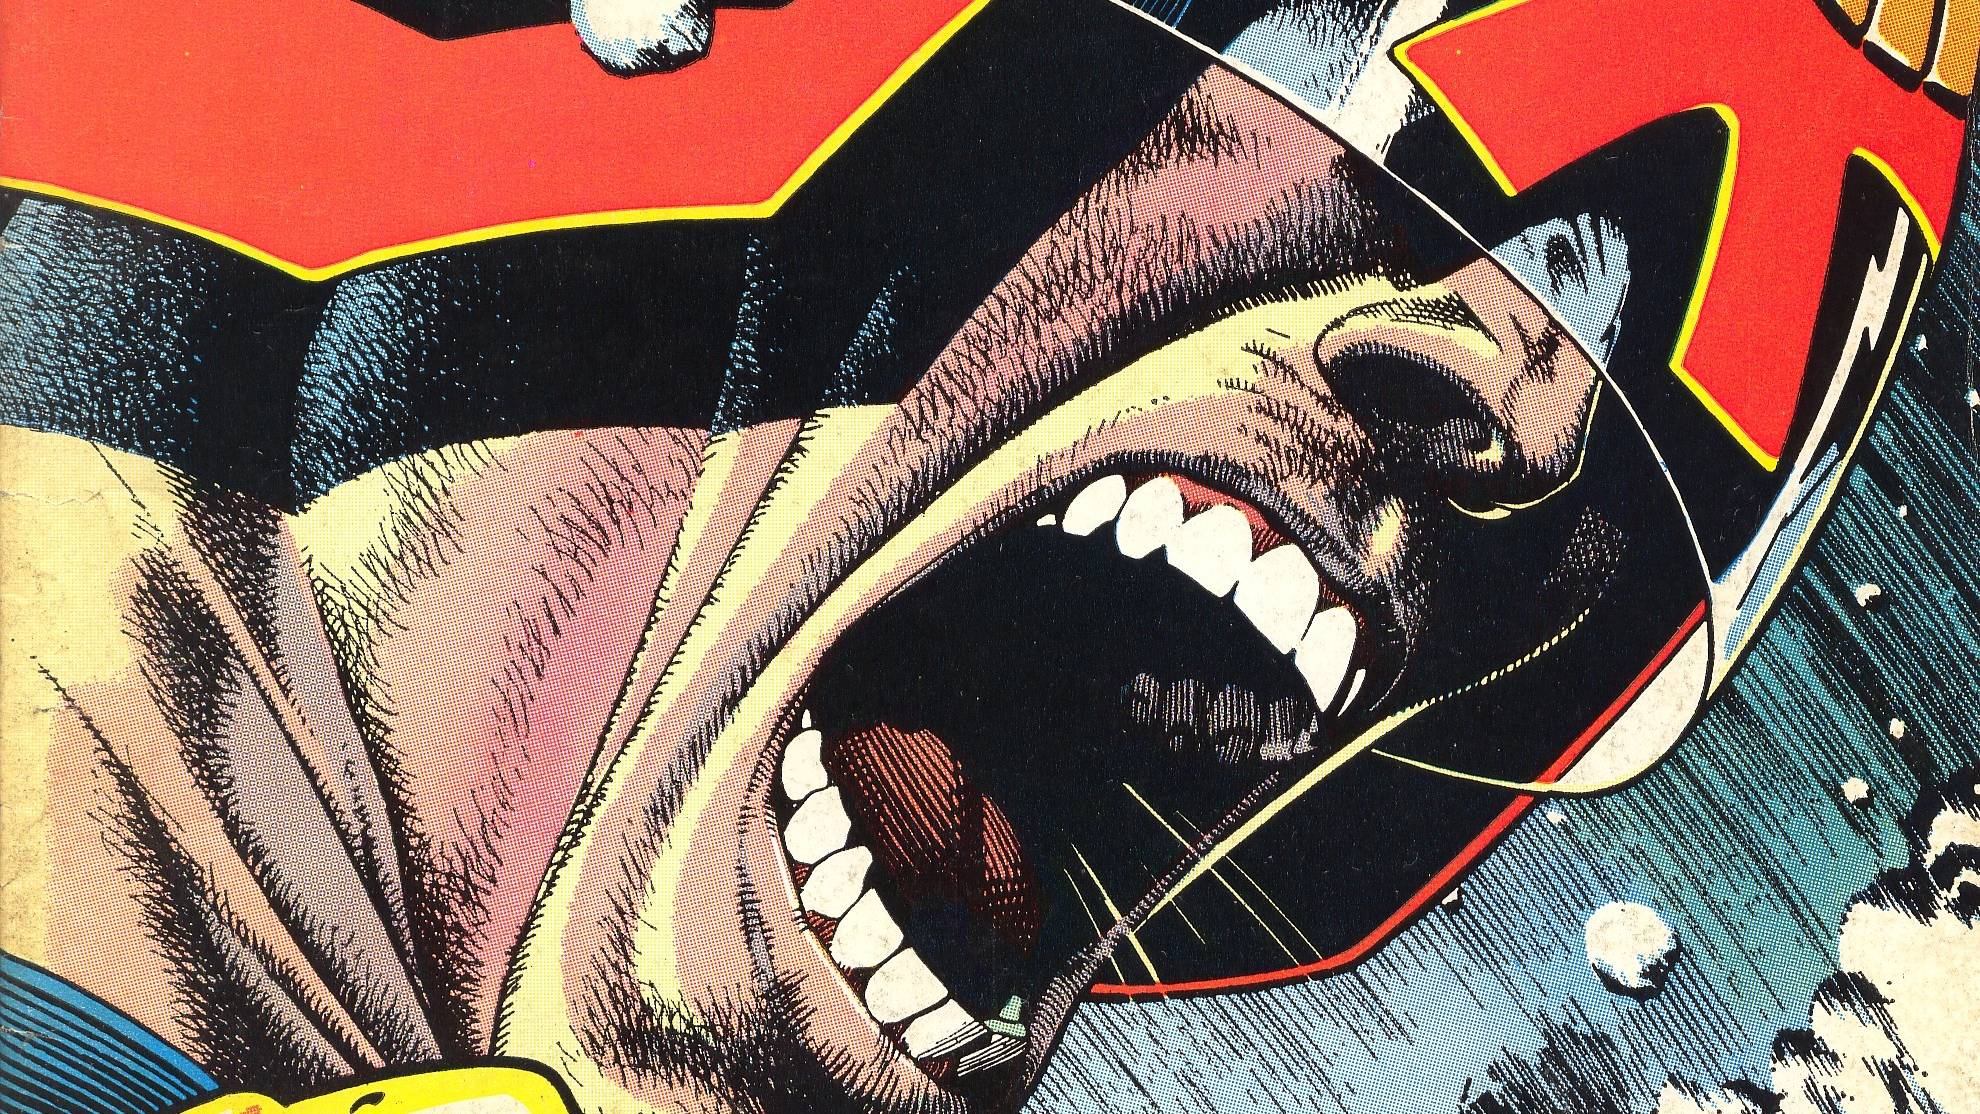 Comics Judge Dredd Wallpaper 1980x1114 px Free Download